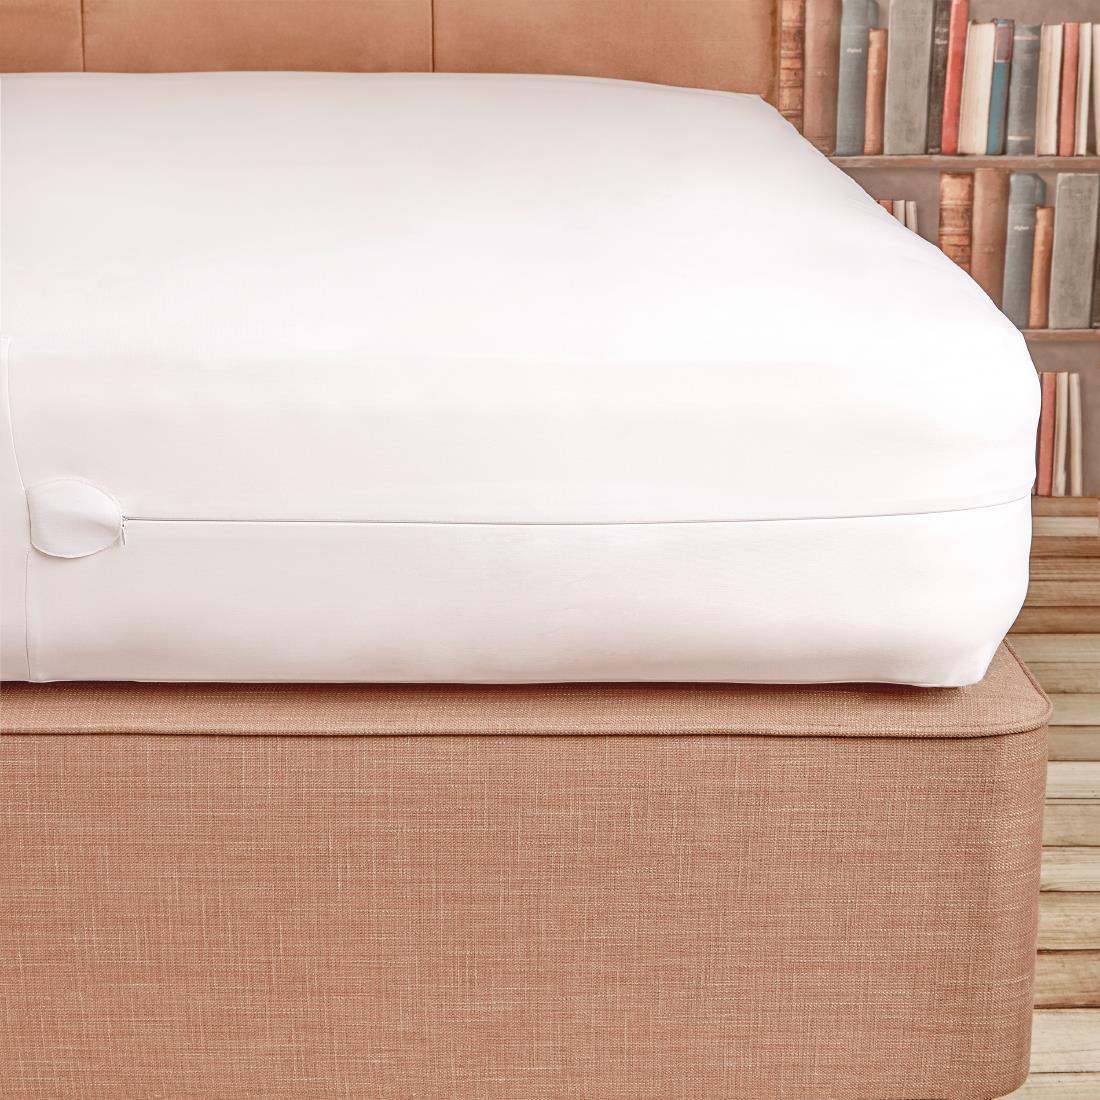 Mitre Comfort Sleepsafe Complete Mattress Encasement King Size - HD249  - 2